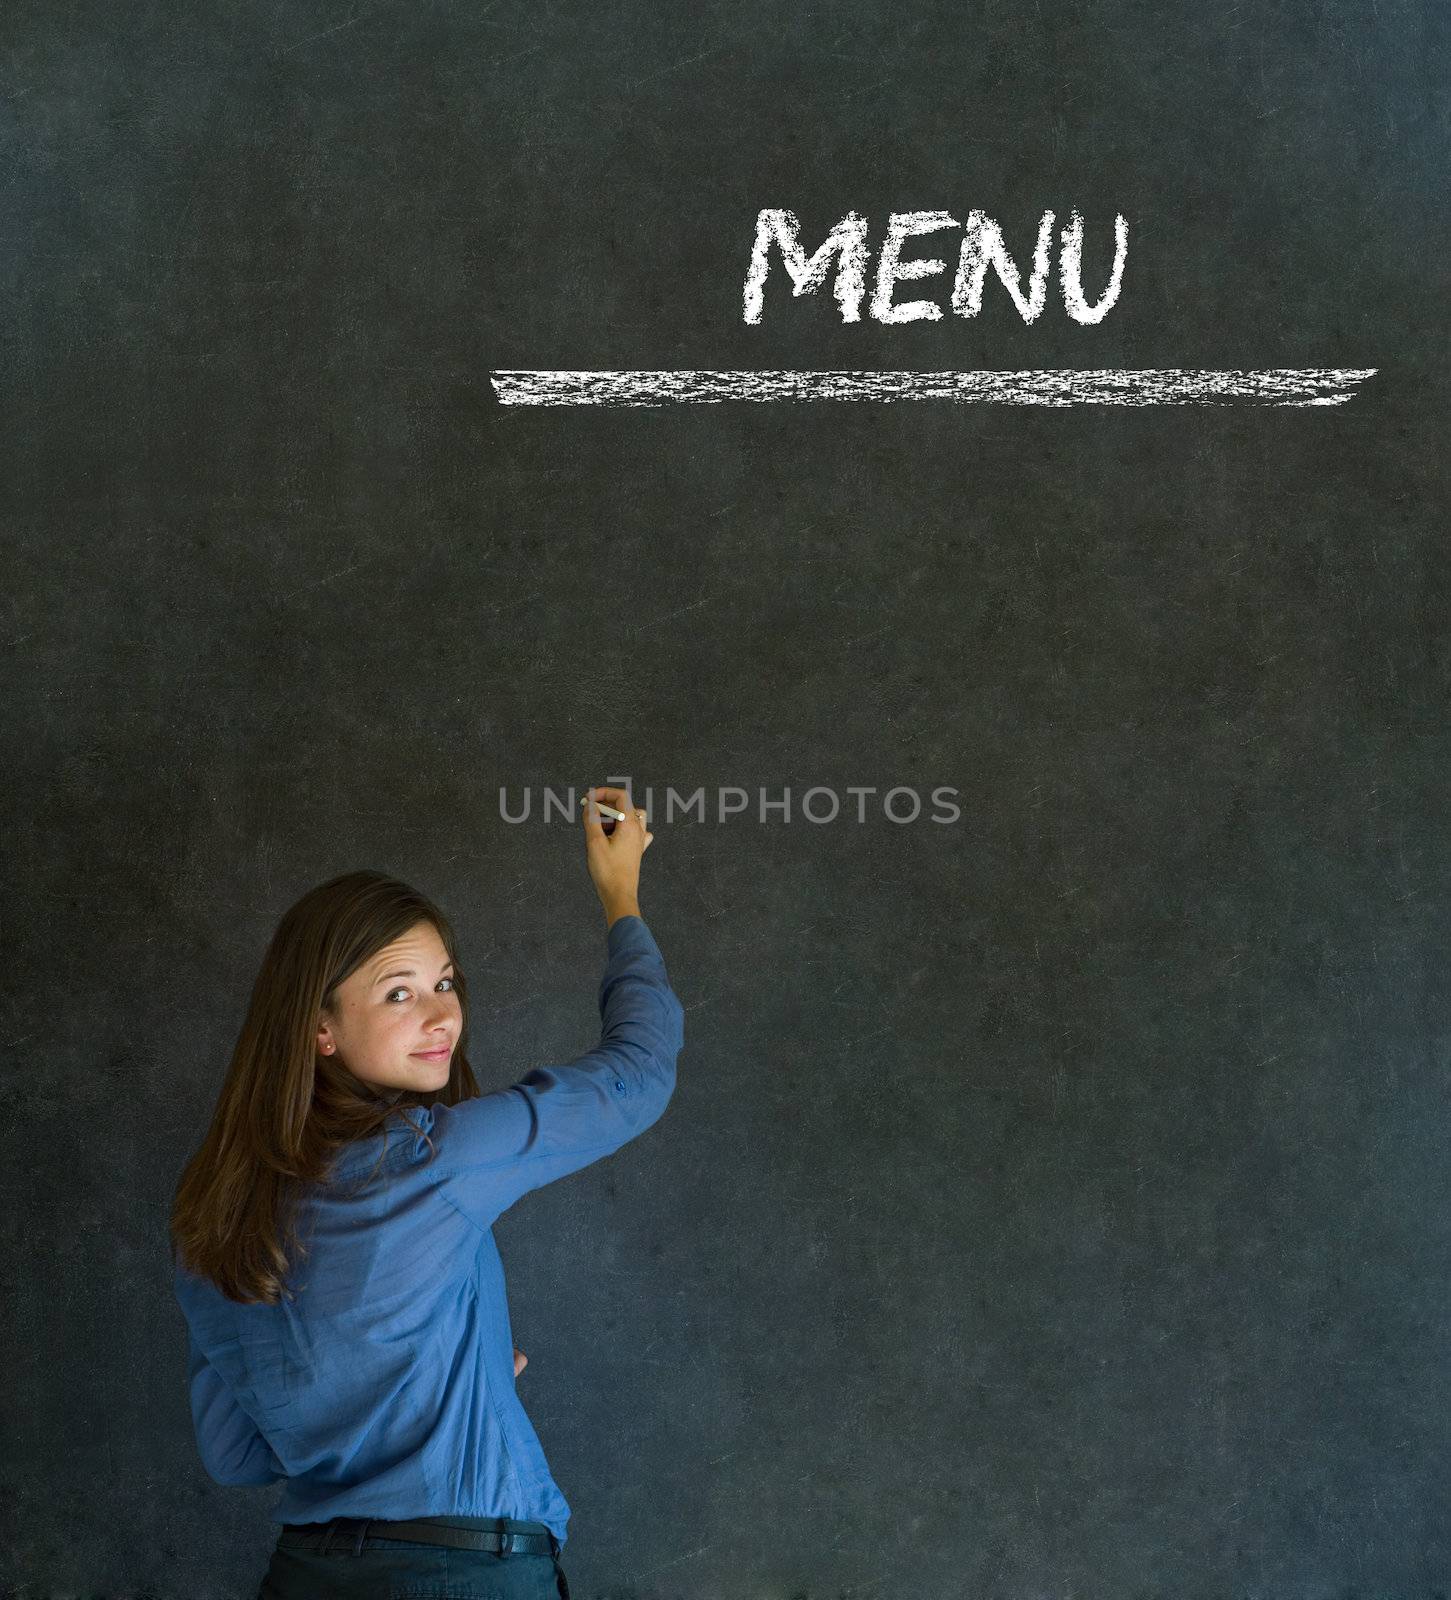 Businesswoman, restaurant owner or chef with chalk menu sign blackboard background